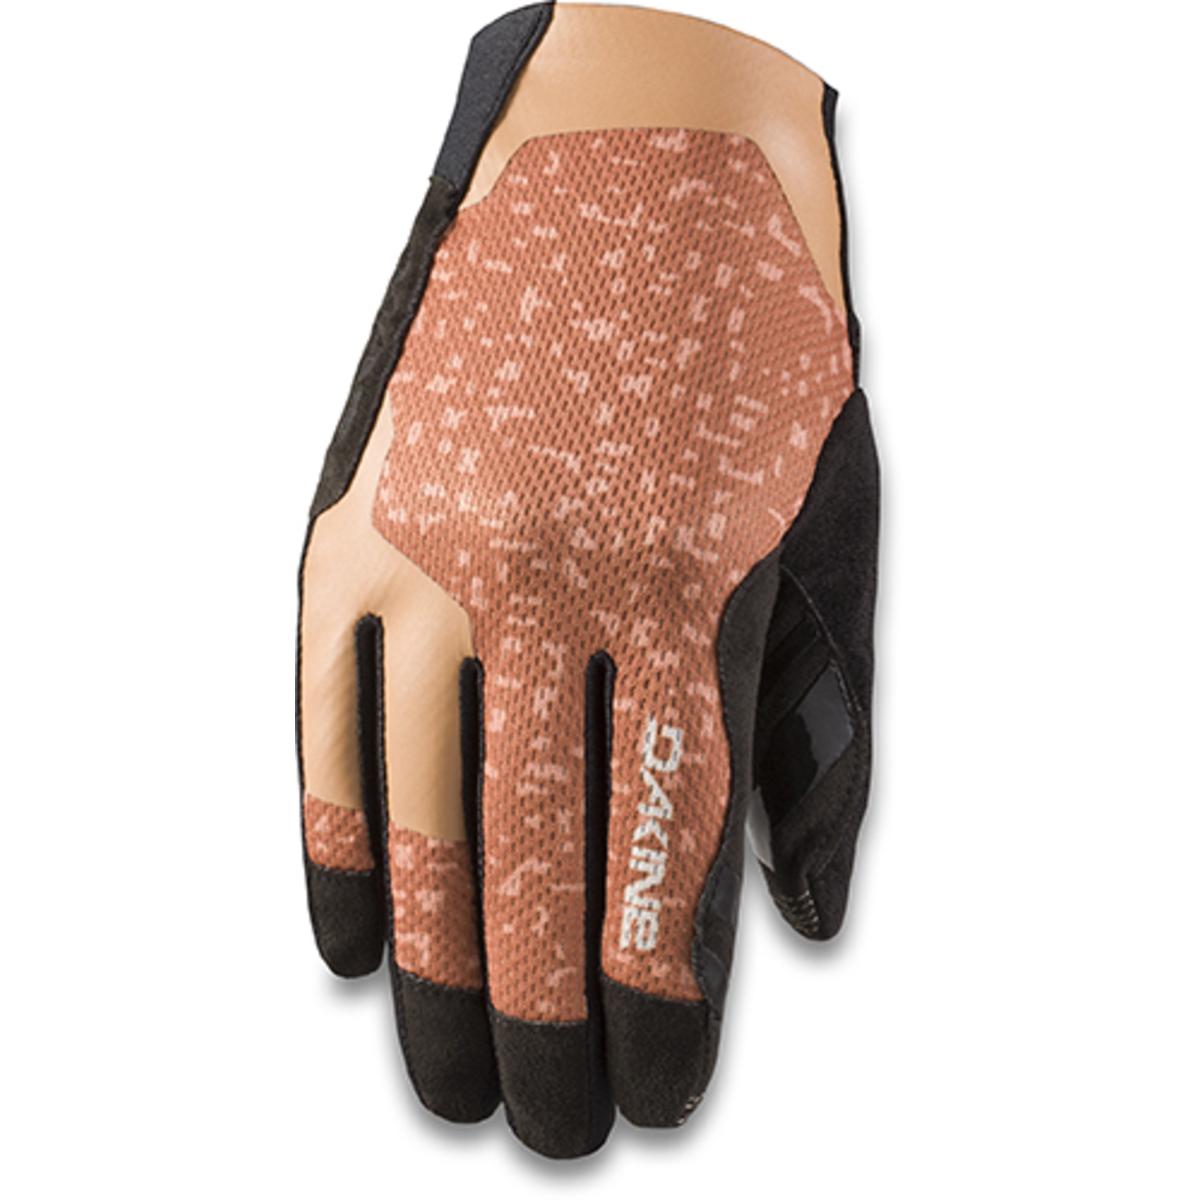 Dakine Covert Women's Bike Gloves